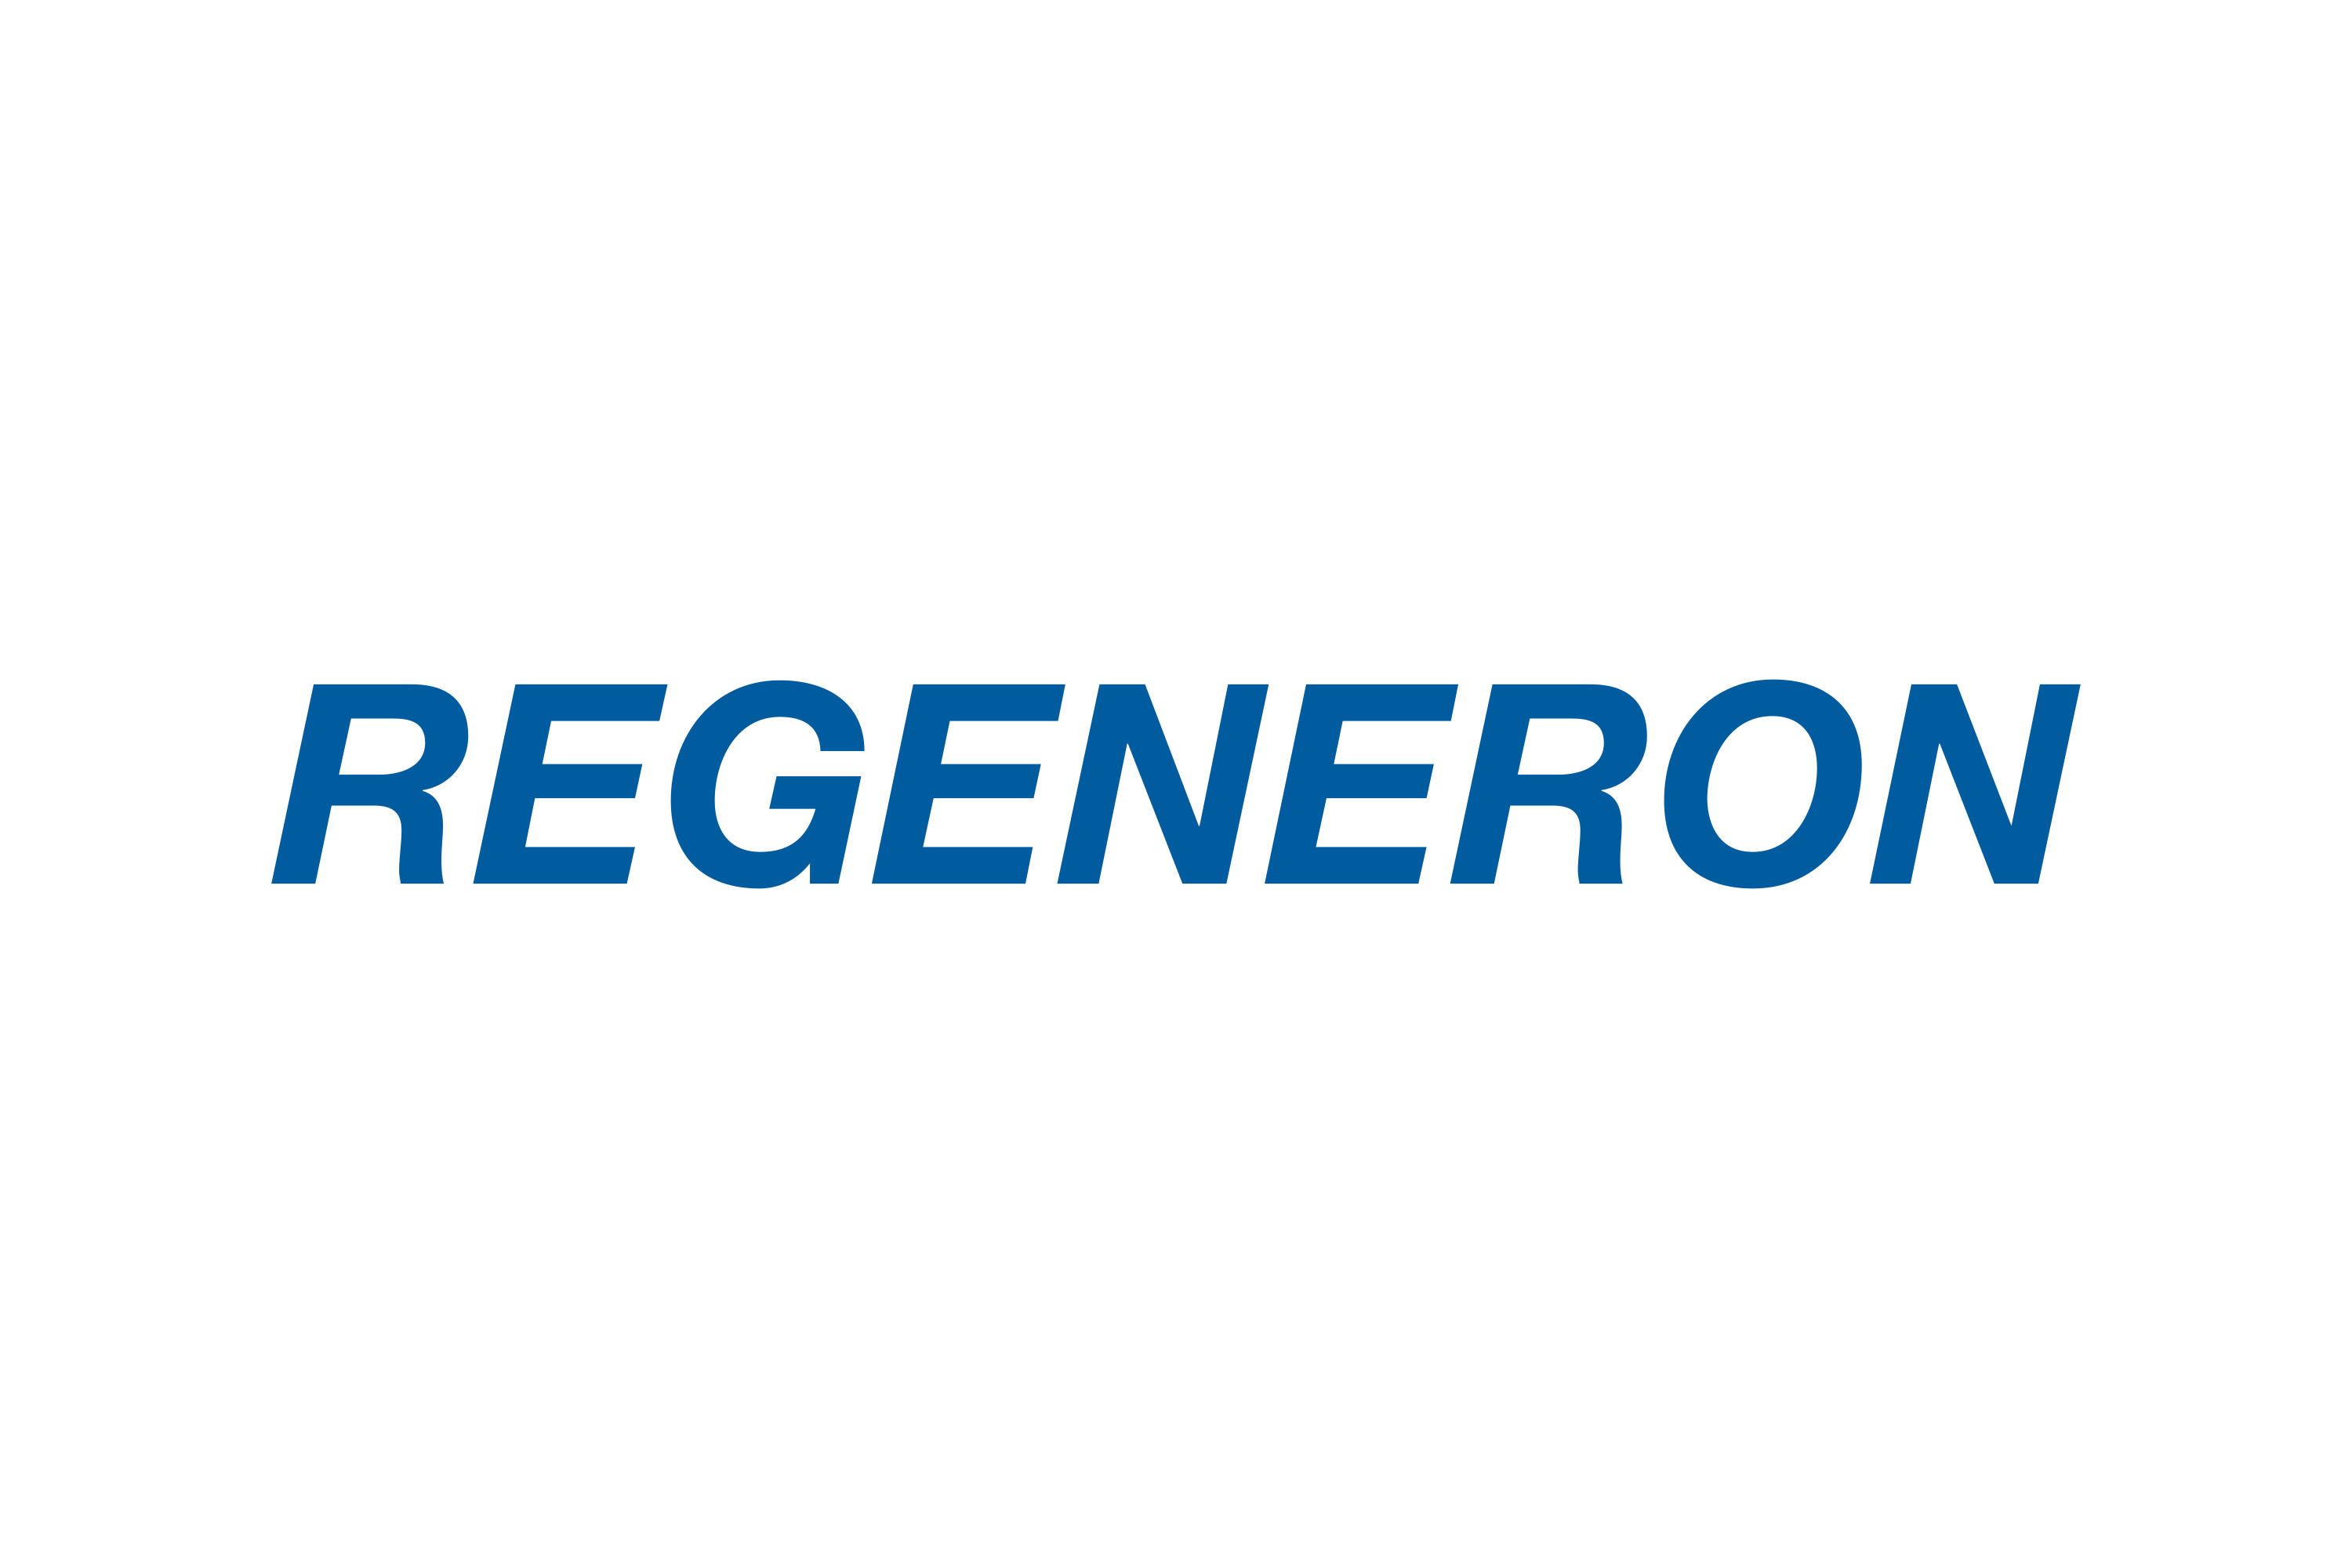 Regeneron_Pharmaceuticals-Logo.wine